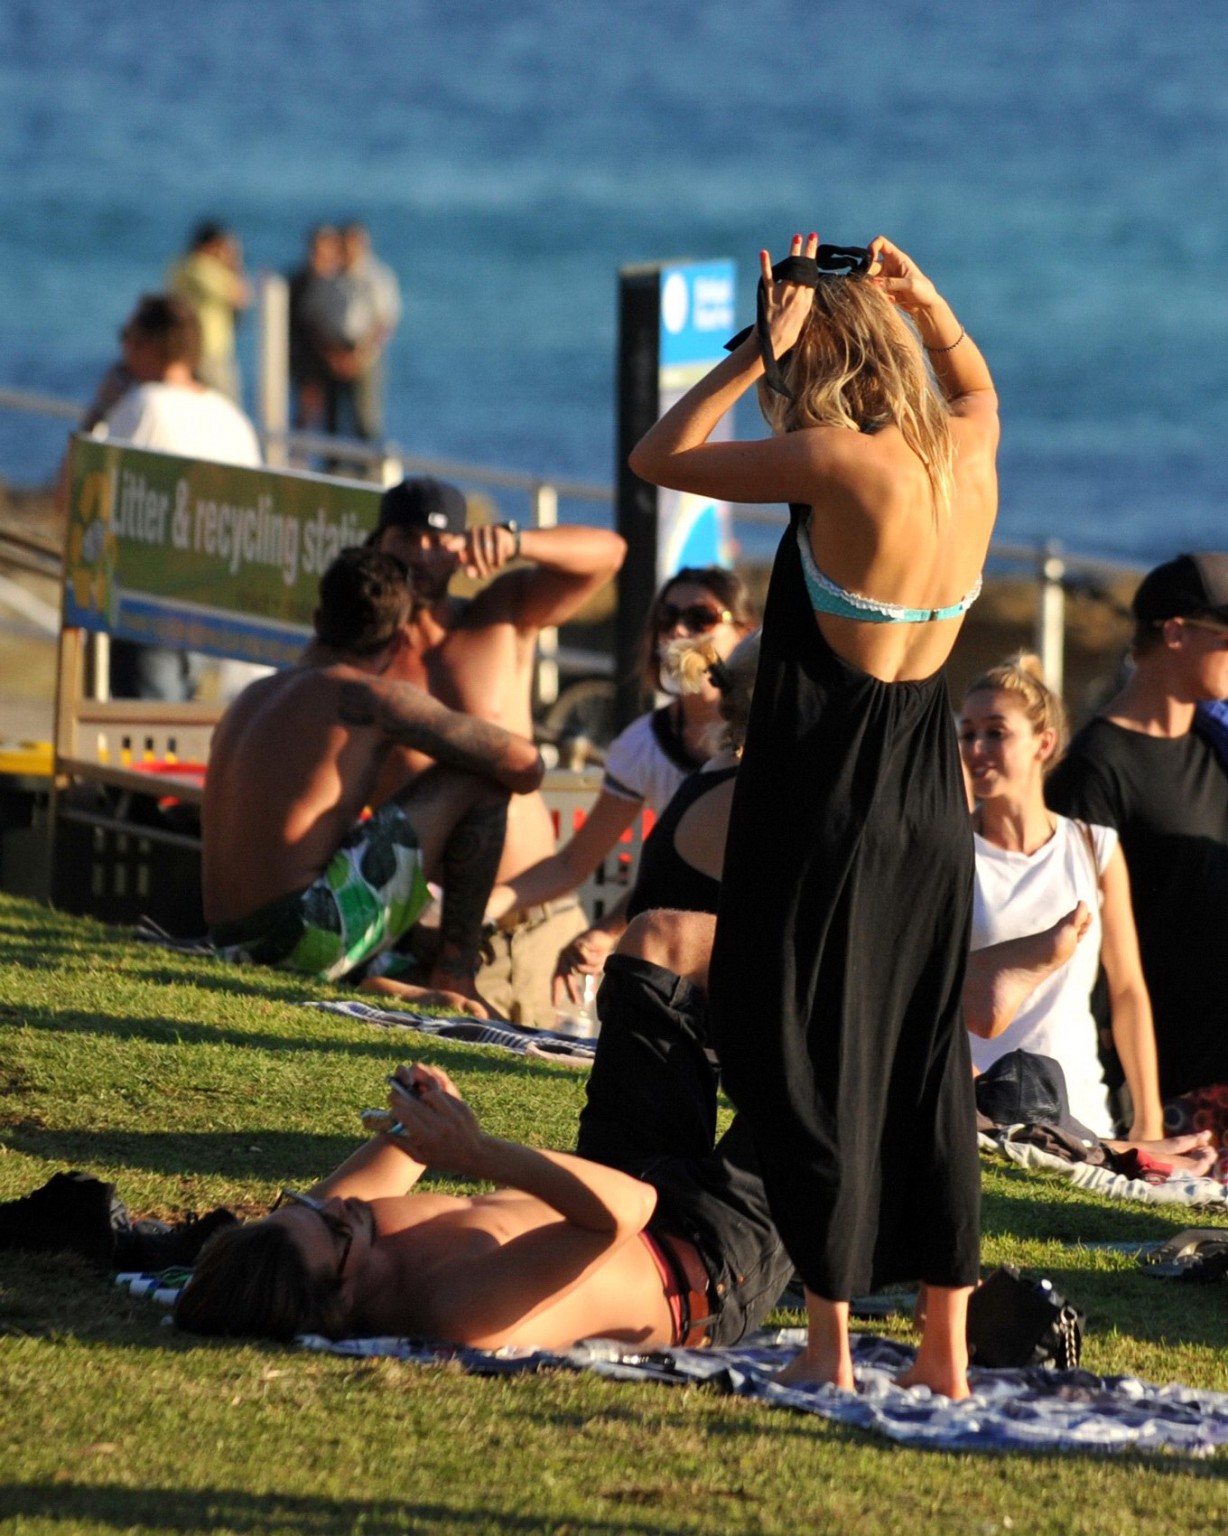 Samara Weaving in bikini petting with her boyfriend on Bondy Beach in Australia #75233662